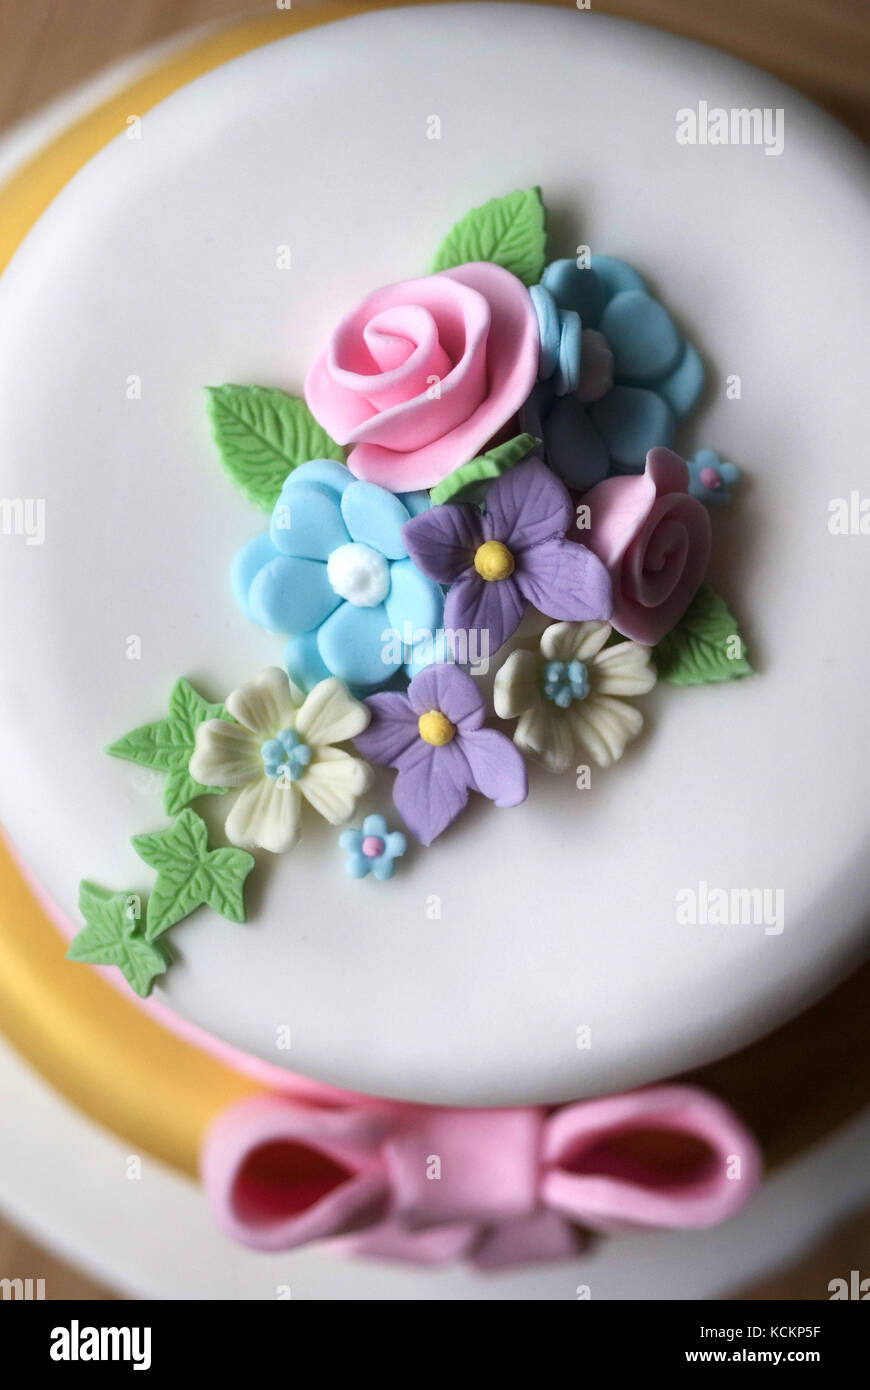 Guinda flores en tortas decoradas Fotografía de stock - Alamy